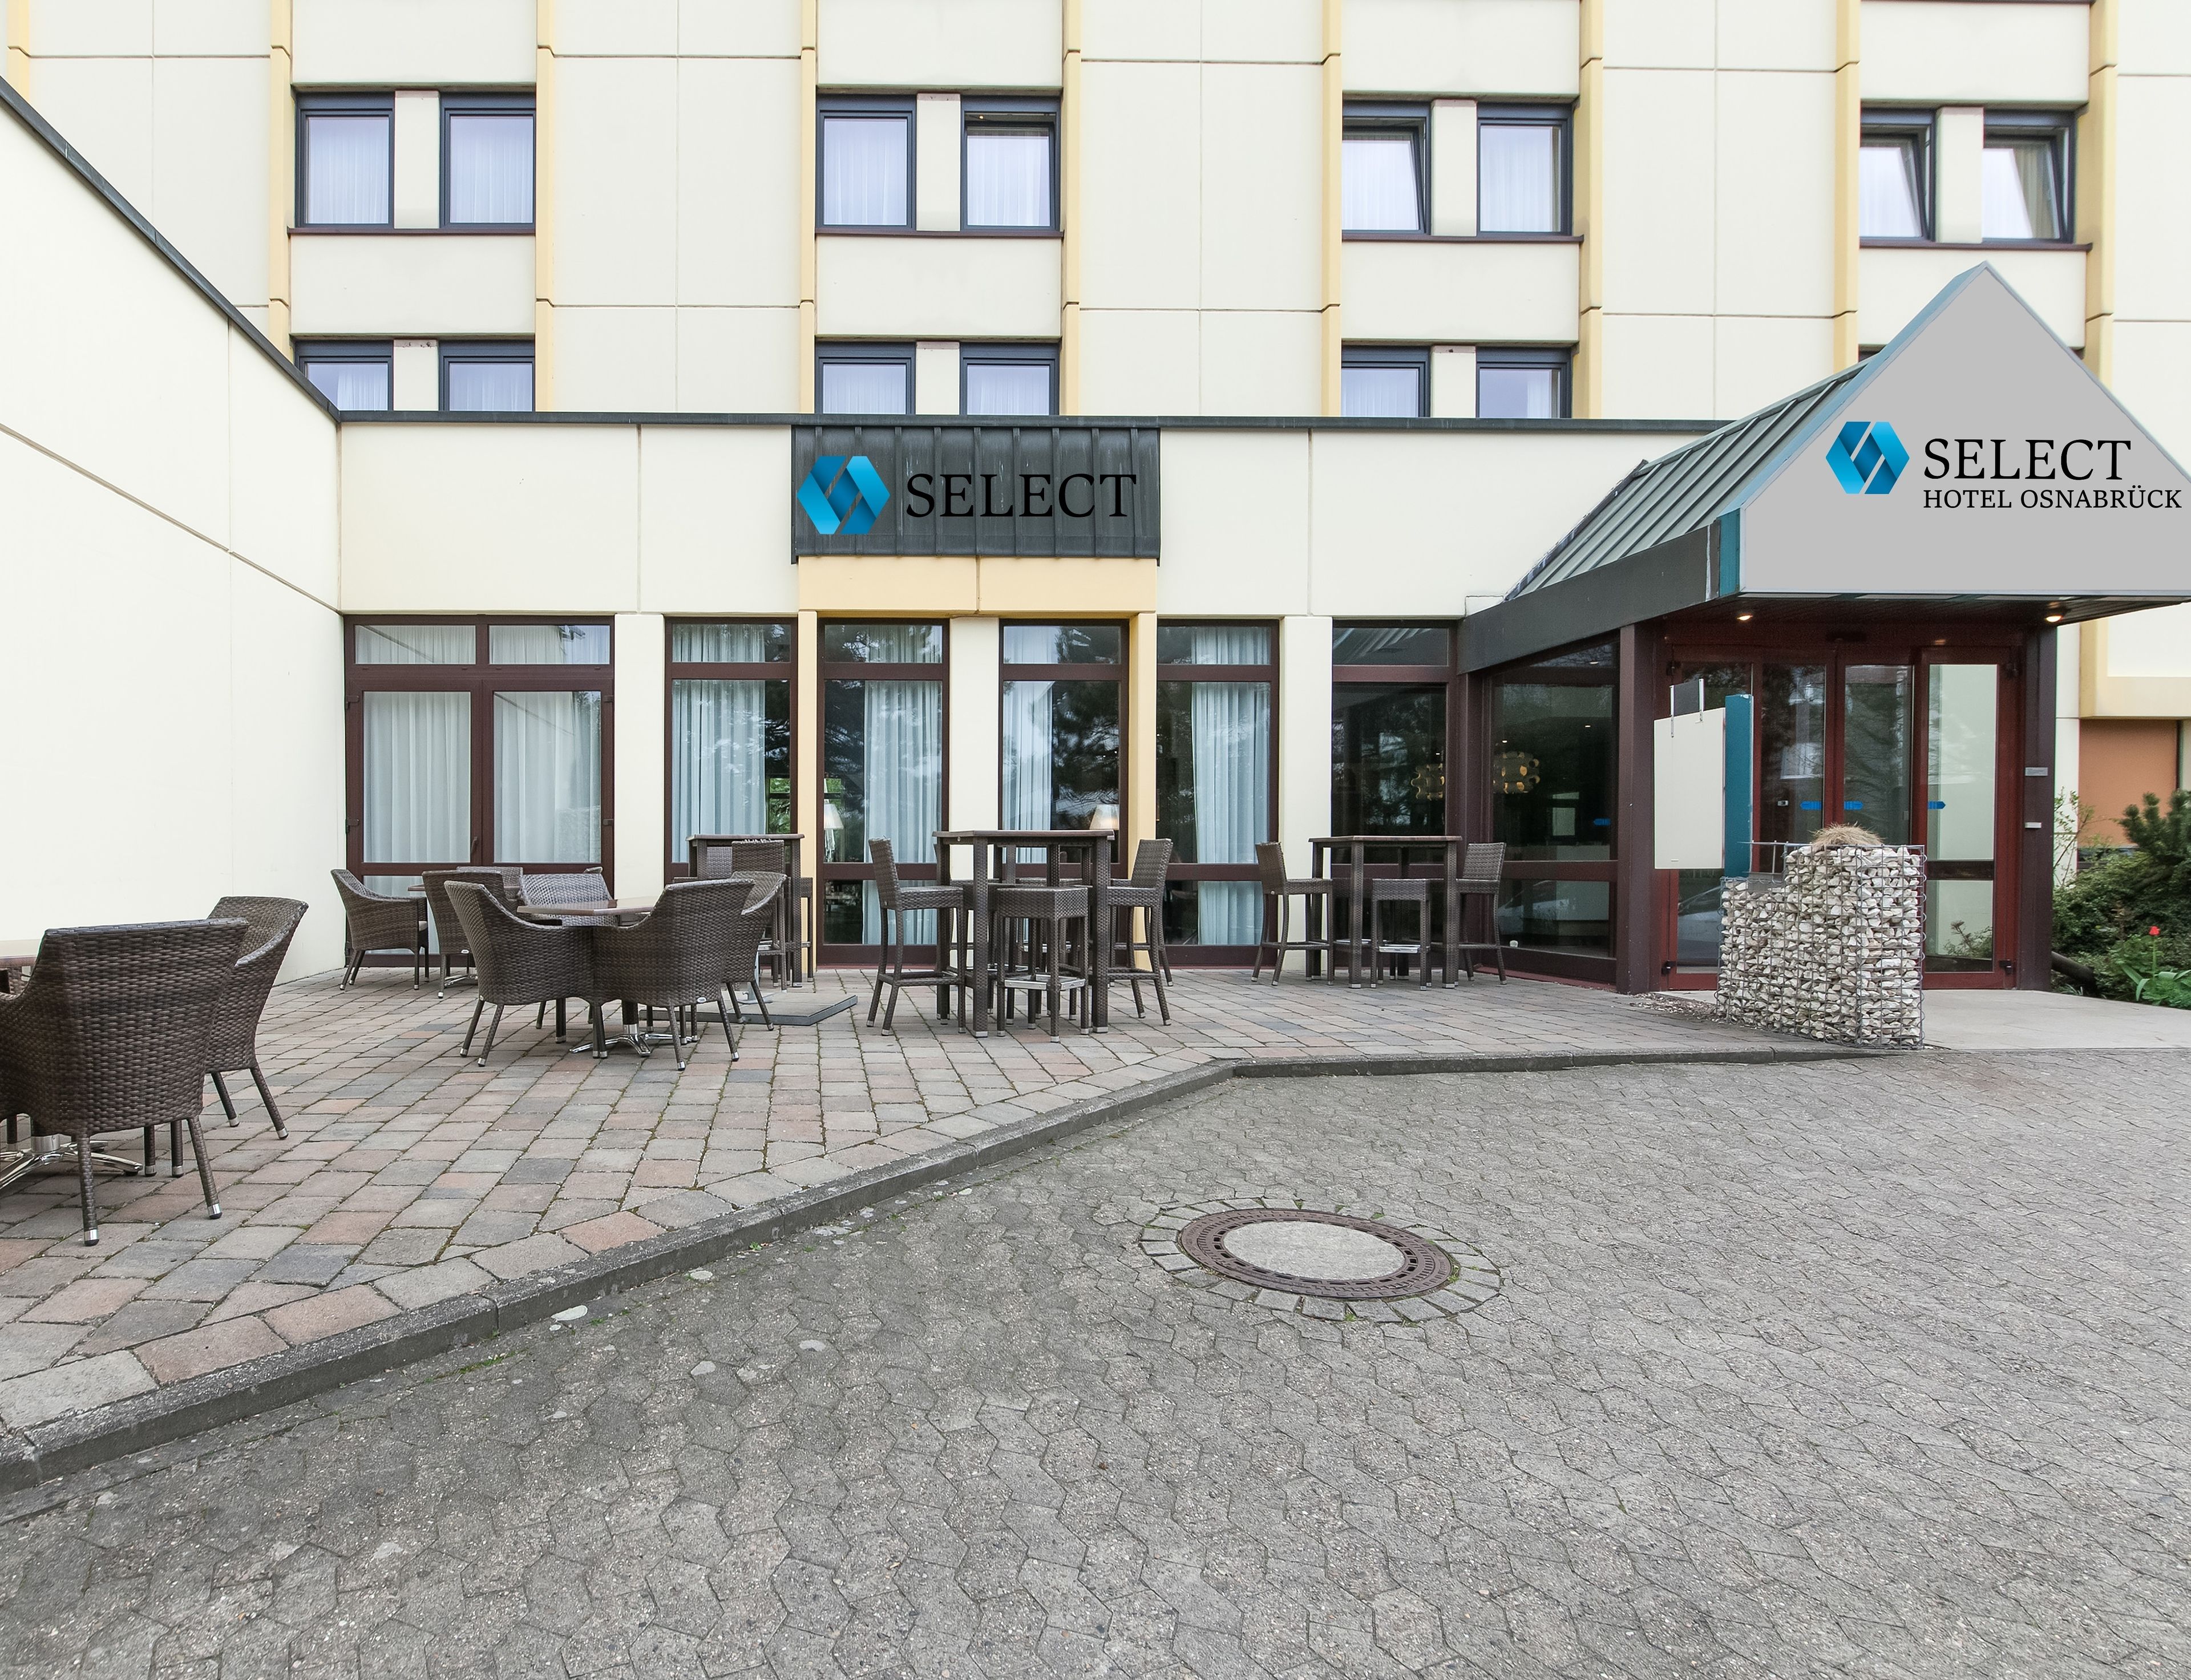 Select Hotel Osnabruck image 1